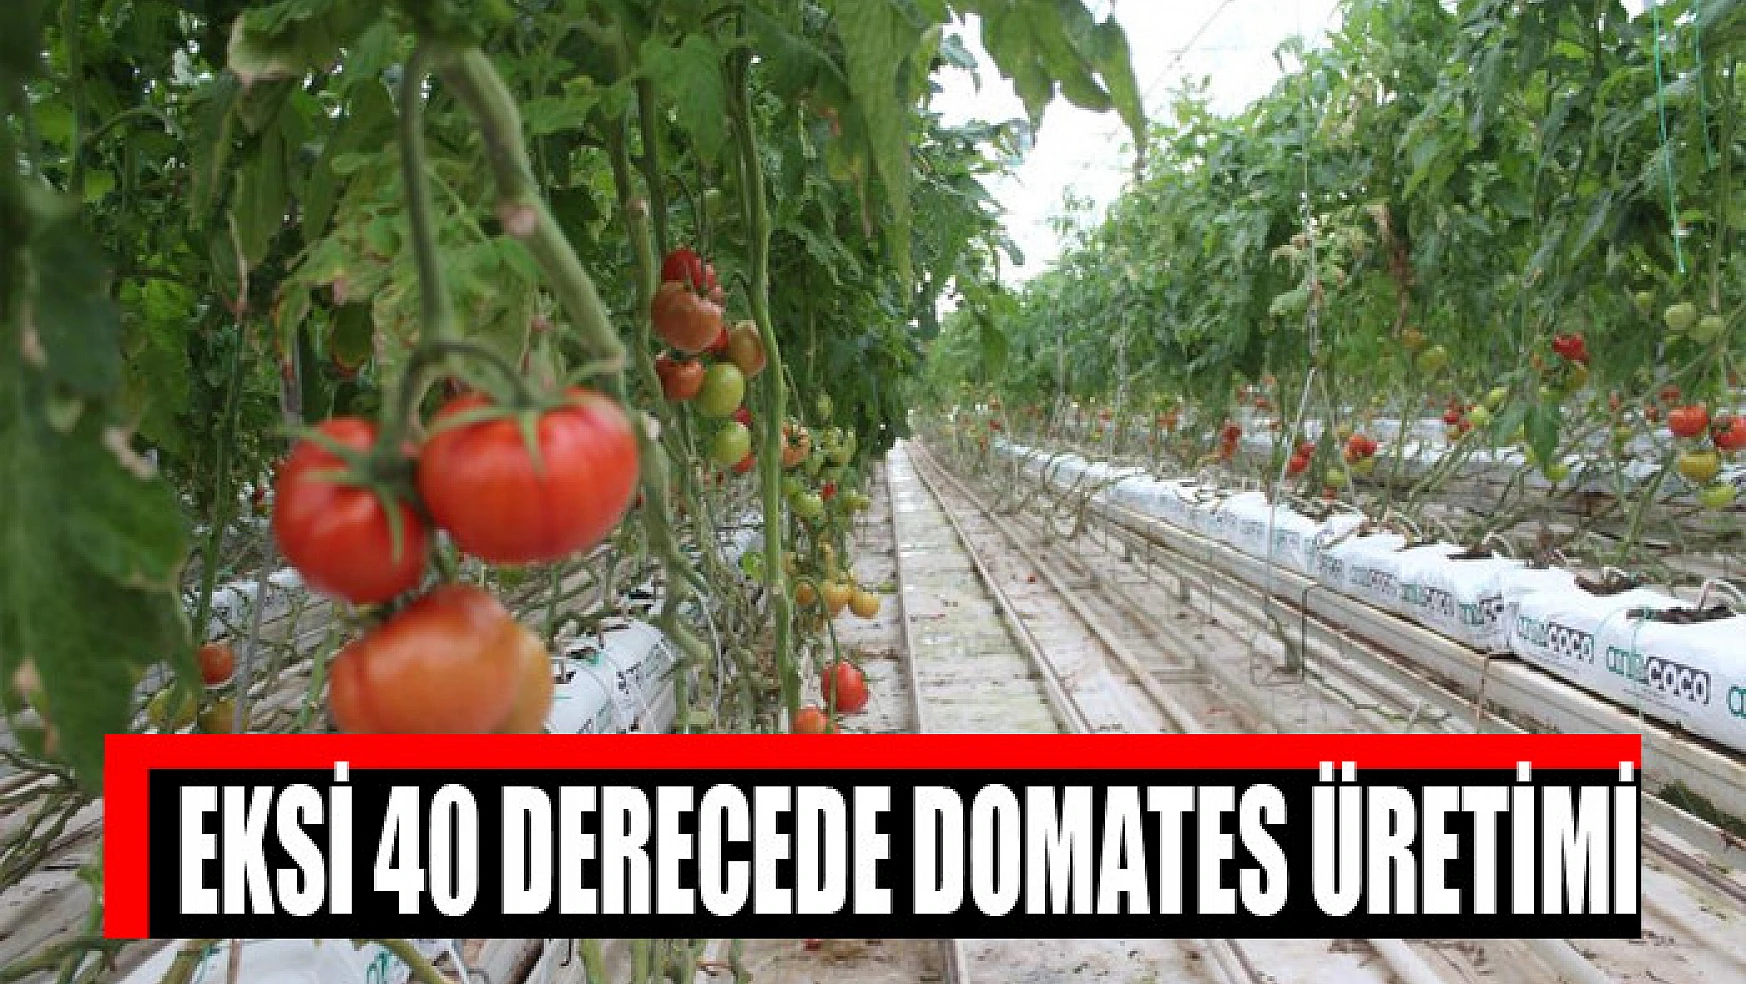  Eksi 40 derecede domates üretimi